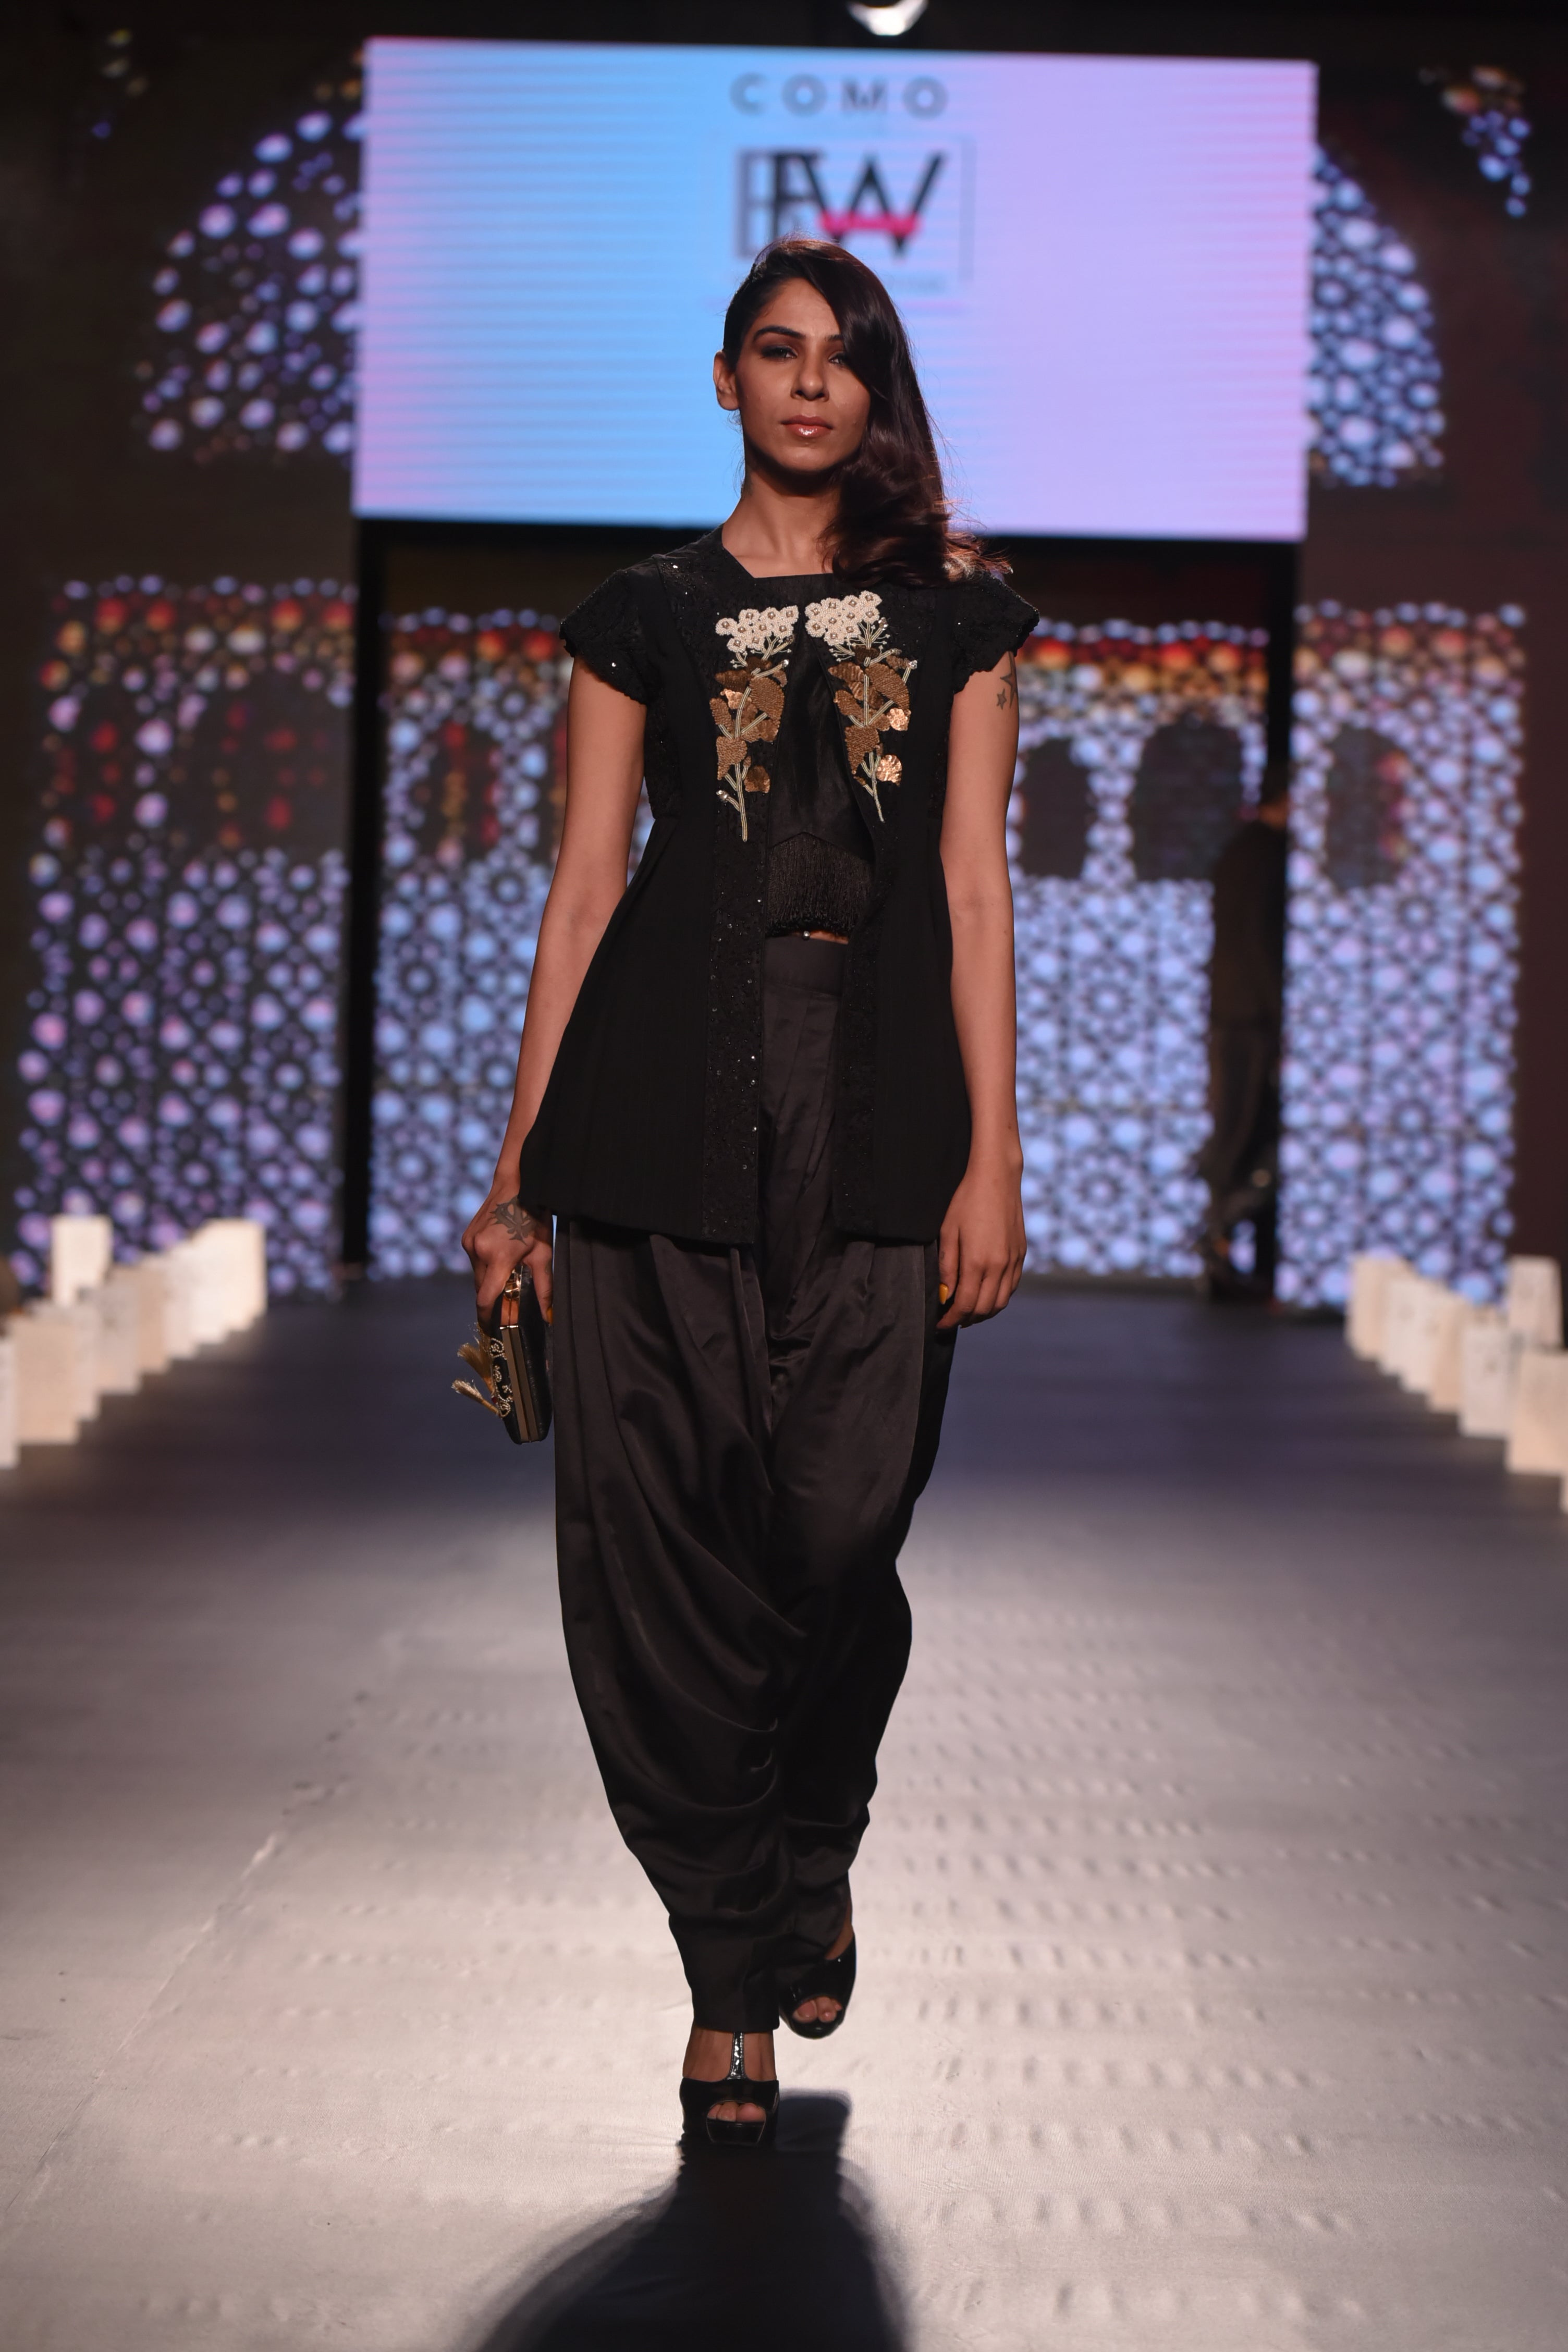 Buy Aqua Dhoti Pants Sari With Embroidered Choli Online for Women by MEHAK  MURPANA  3816869